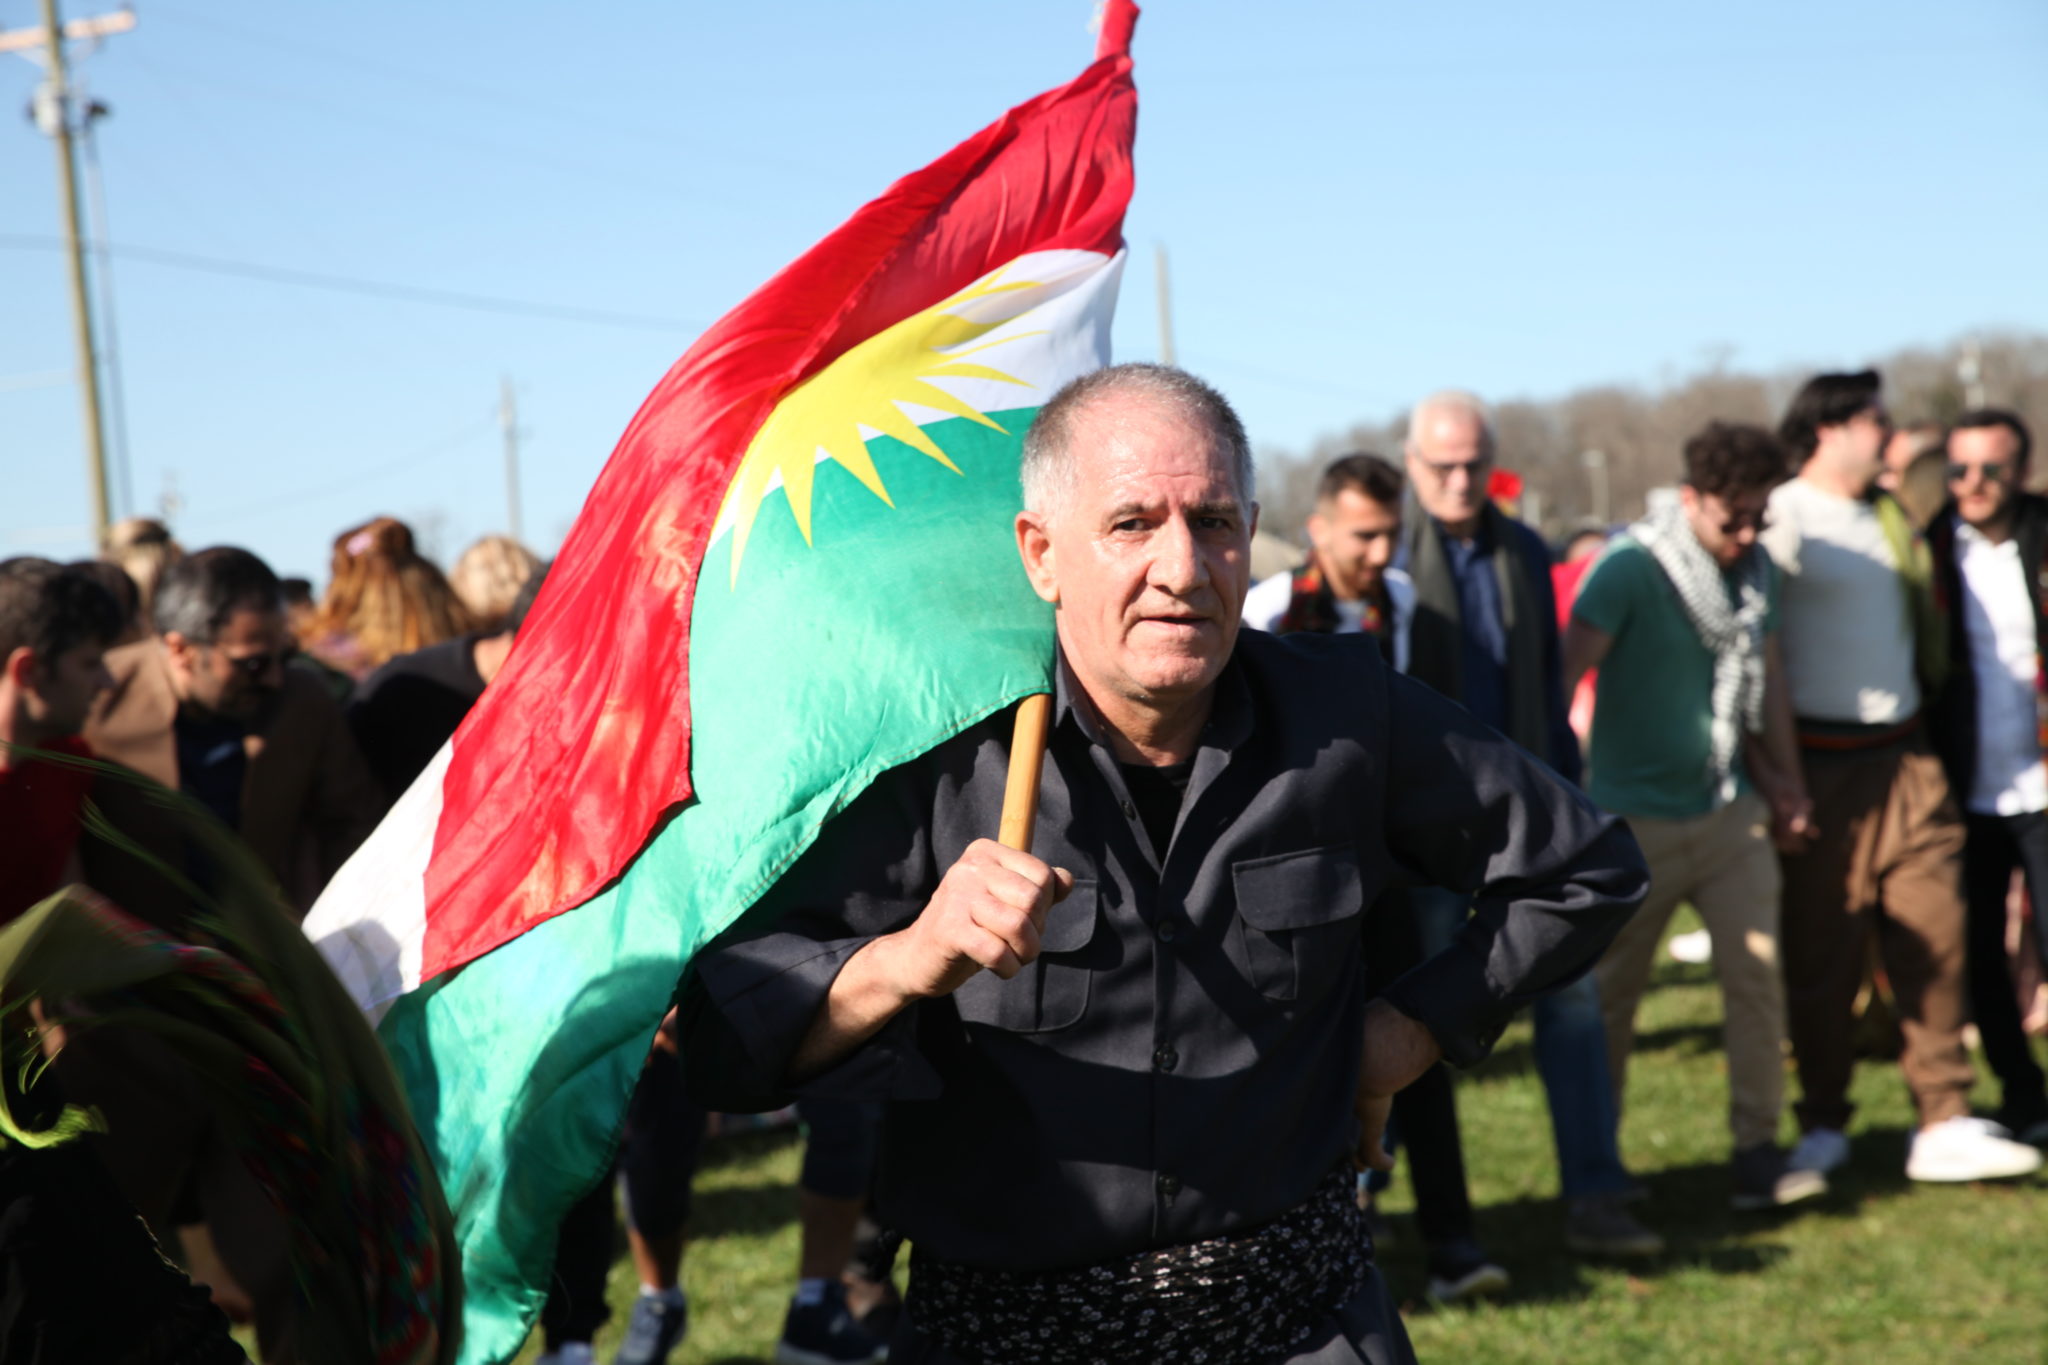 Nashville's Kurdish community celebrates Newroz with thousands attending the first new year